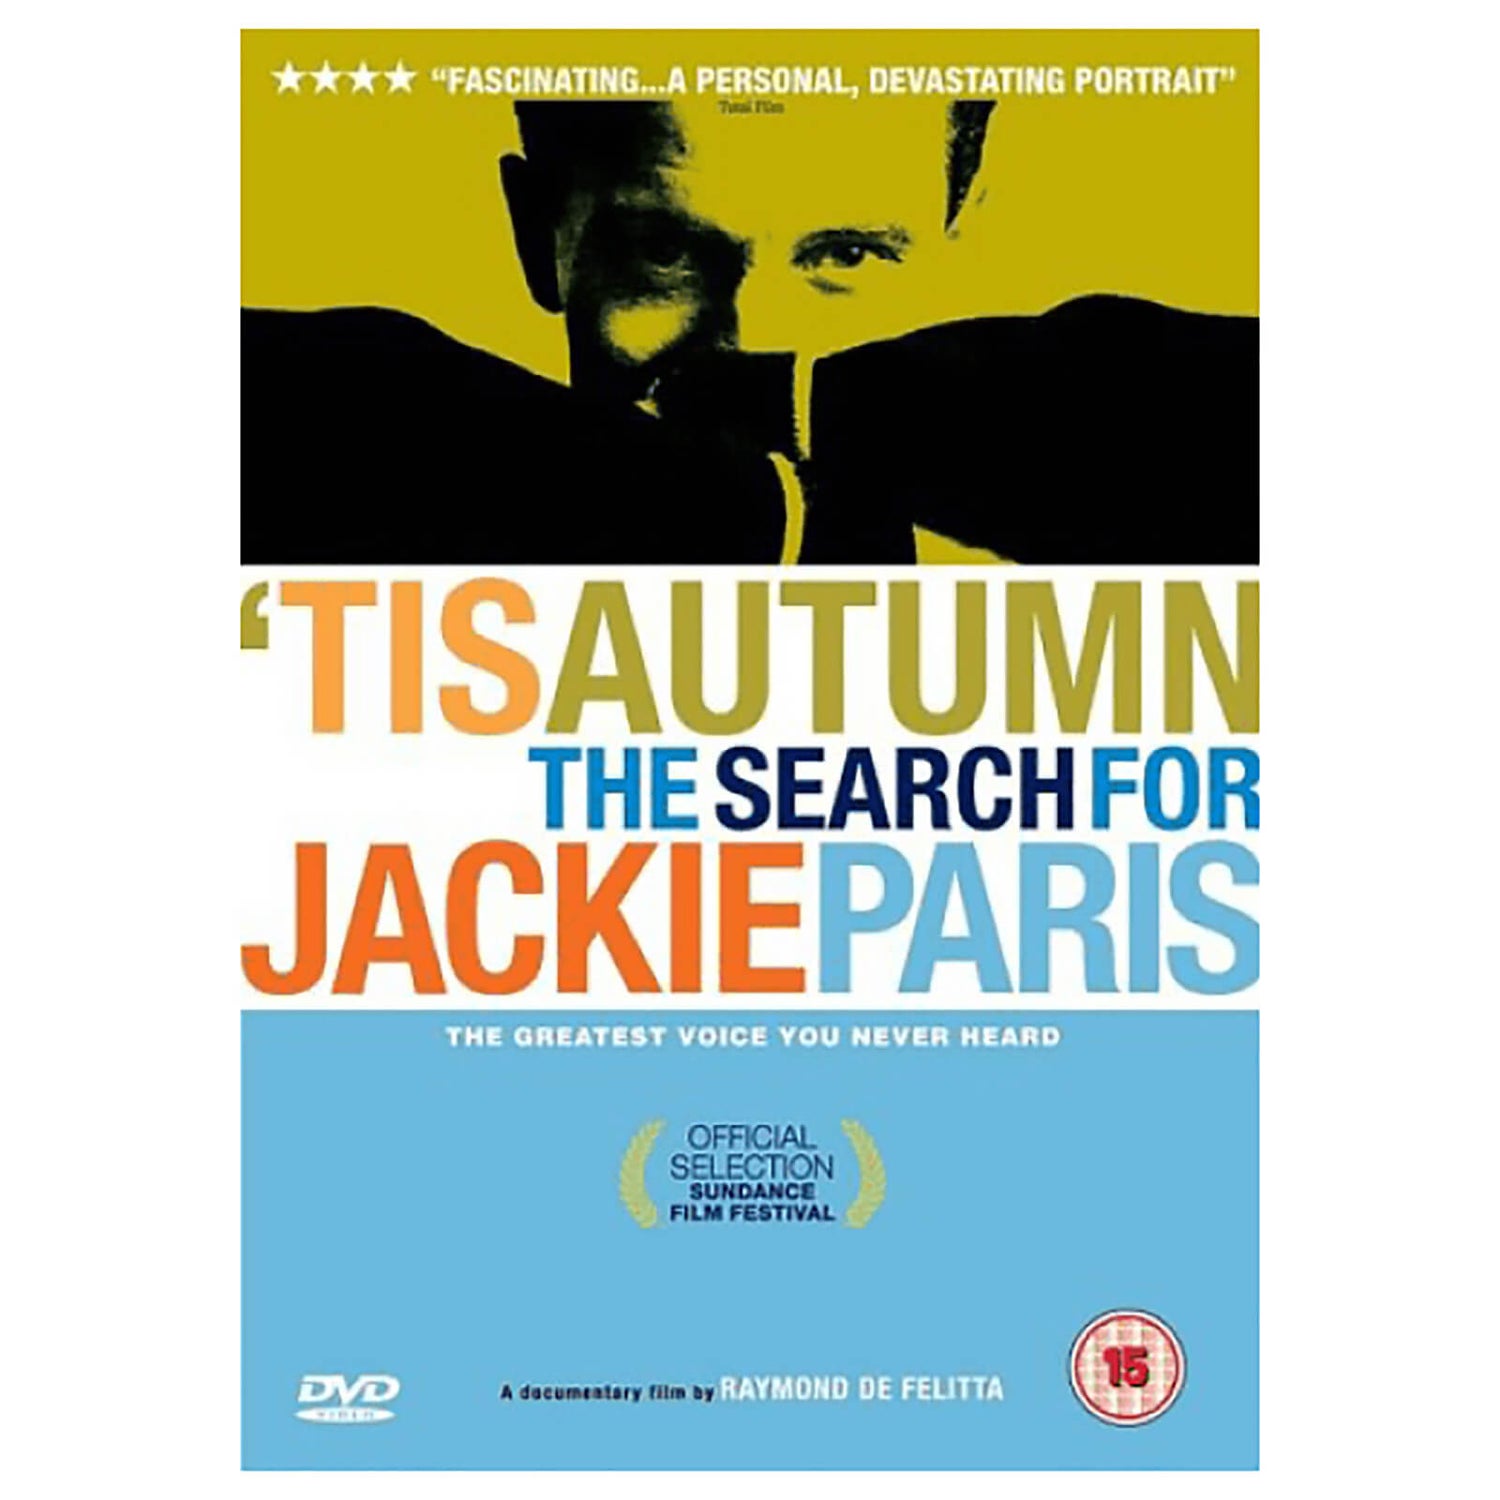 Tis Autumn - The Search For Jackie Paris